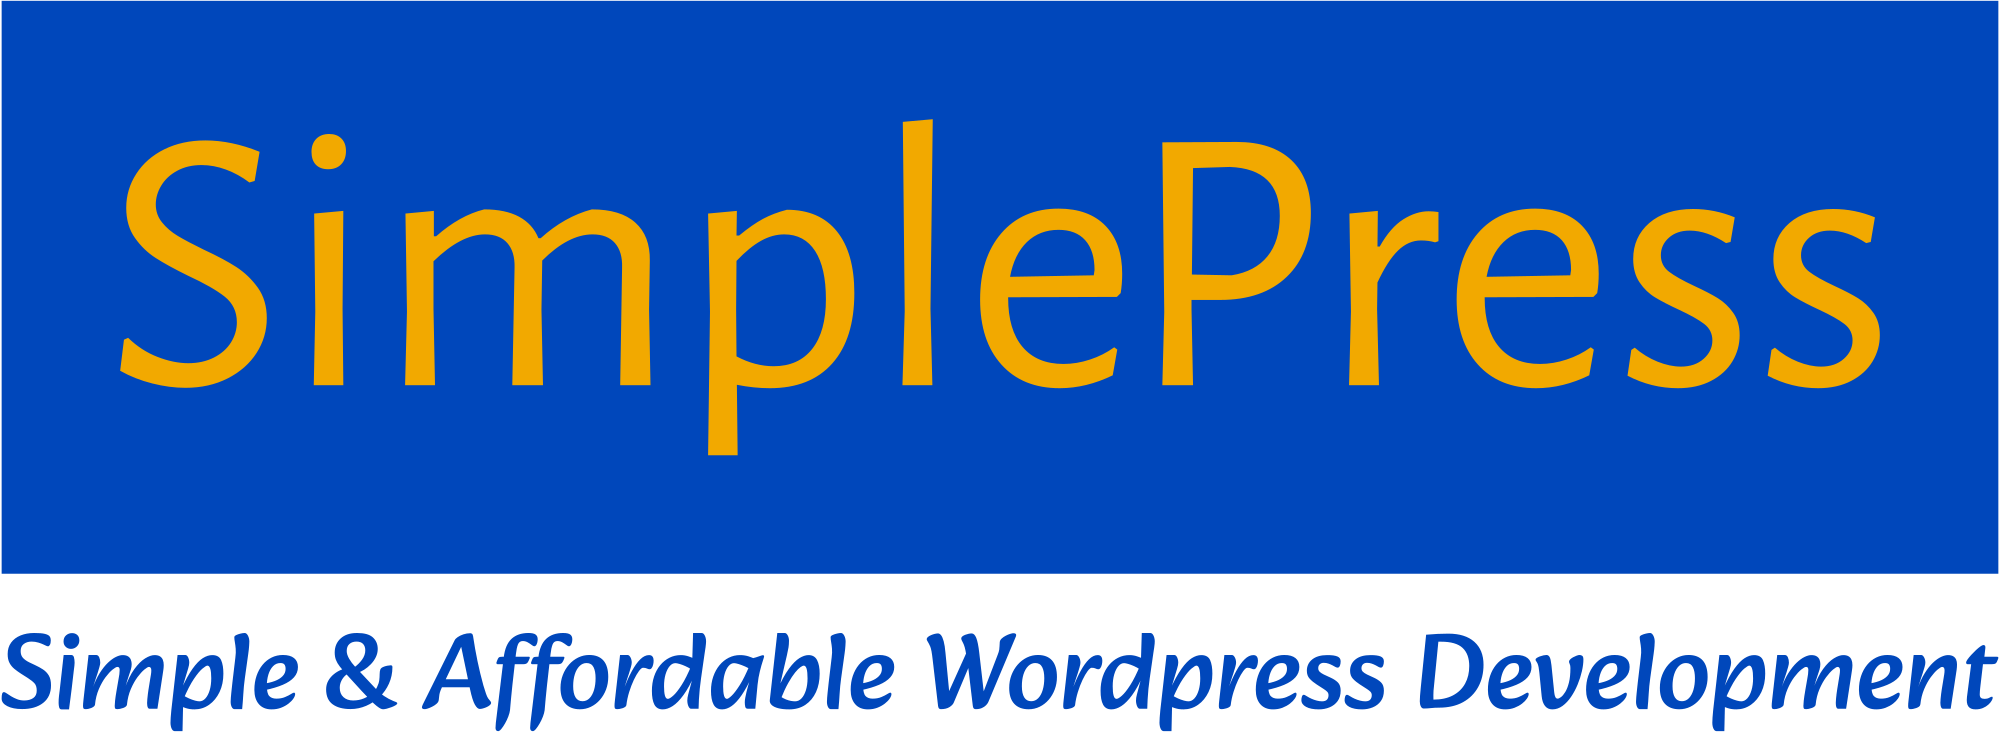 simplepress logo